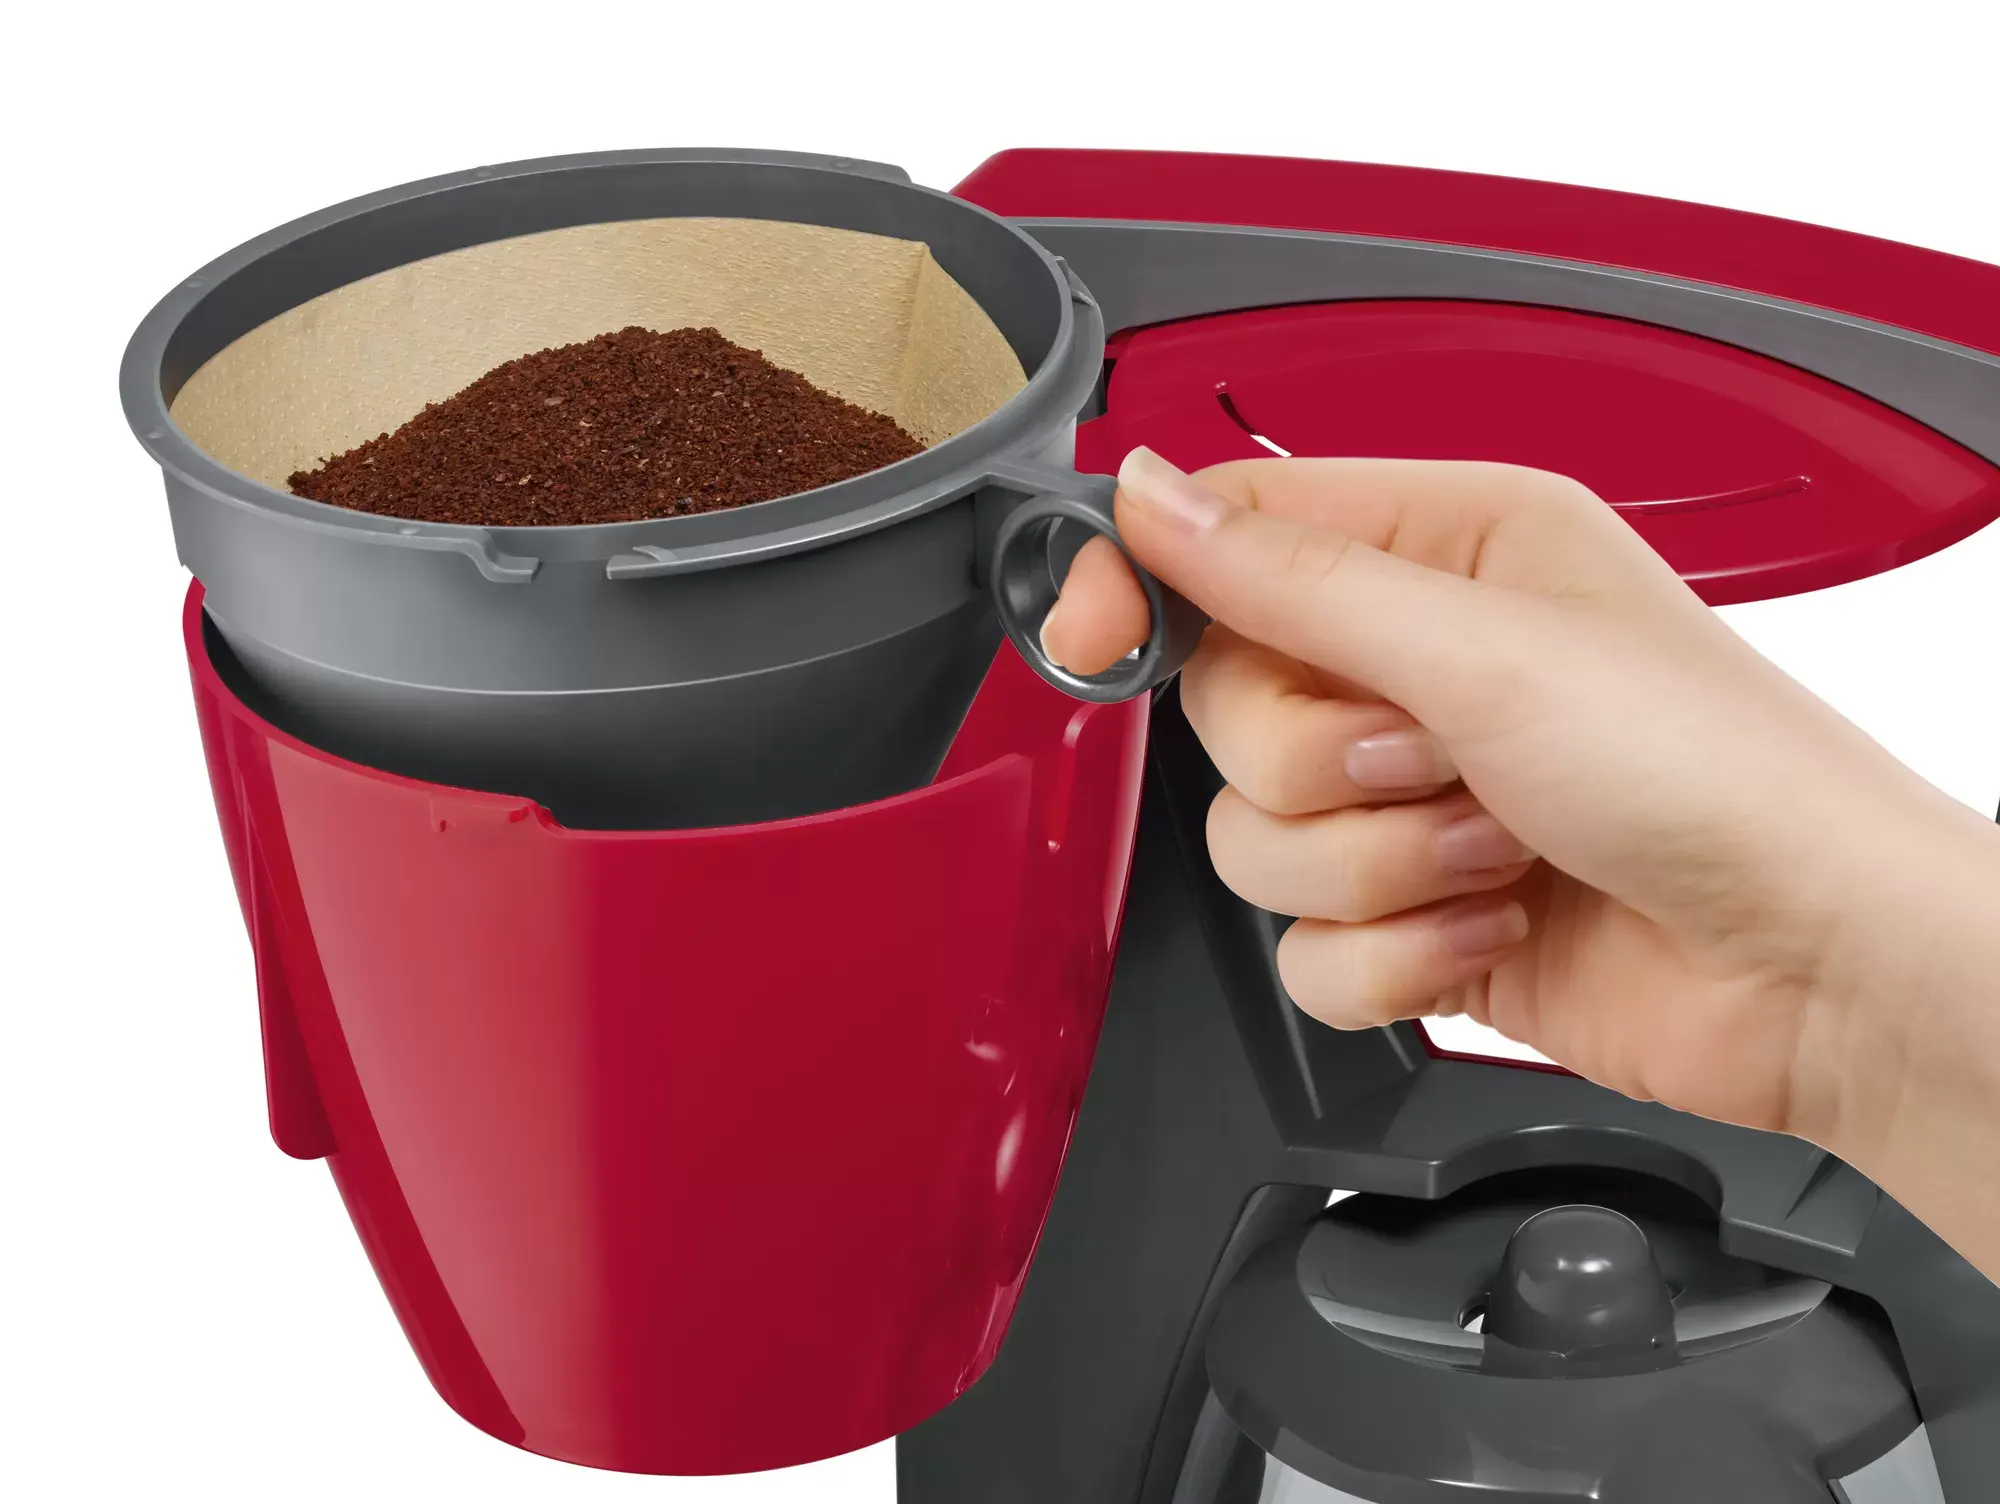 Bosch Comfort Line American Coffee Maker, 1200 Watt, Red, TKA6A044